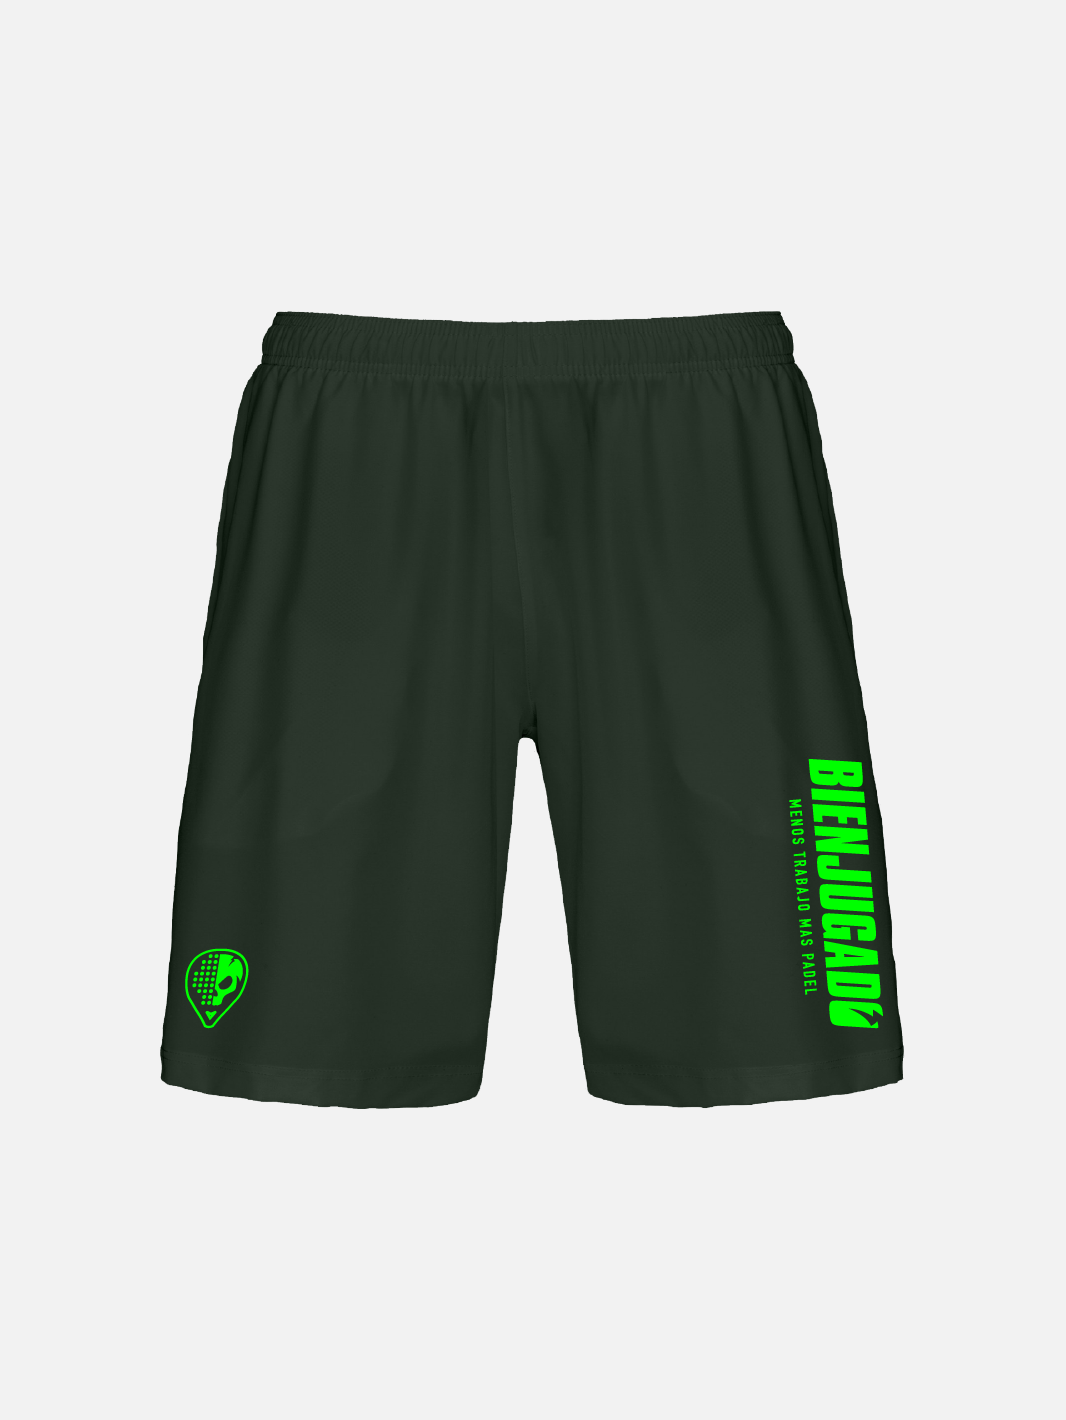 Men's Shorts - Military Green